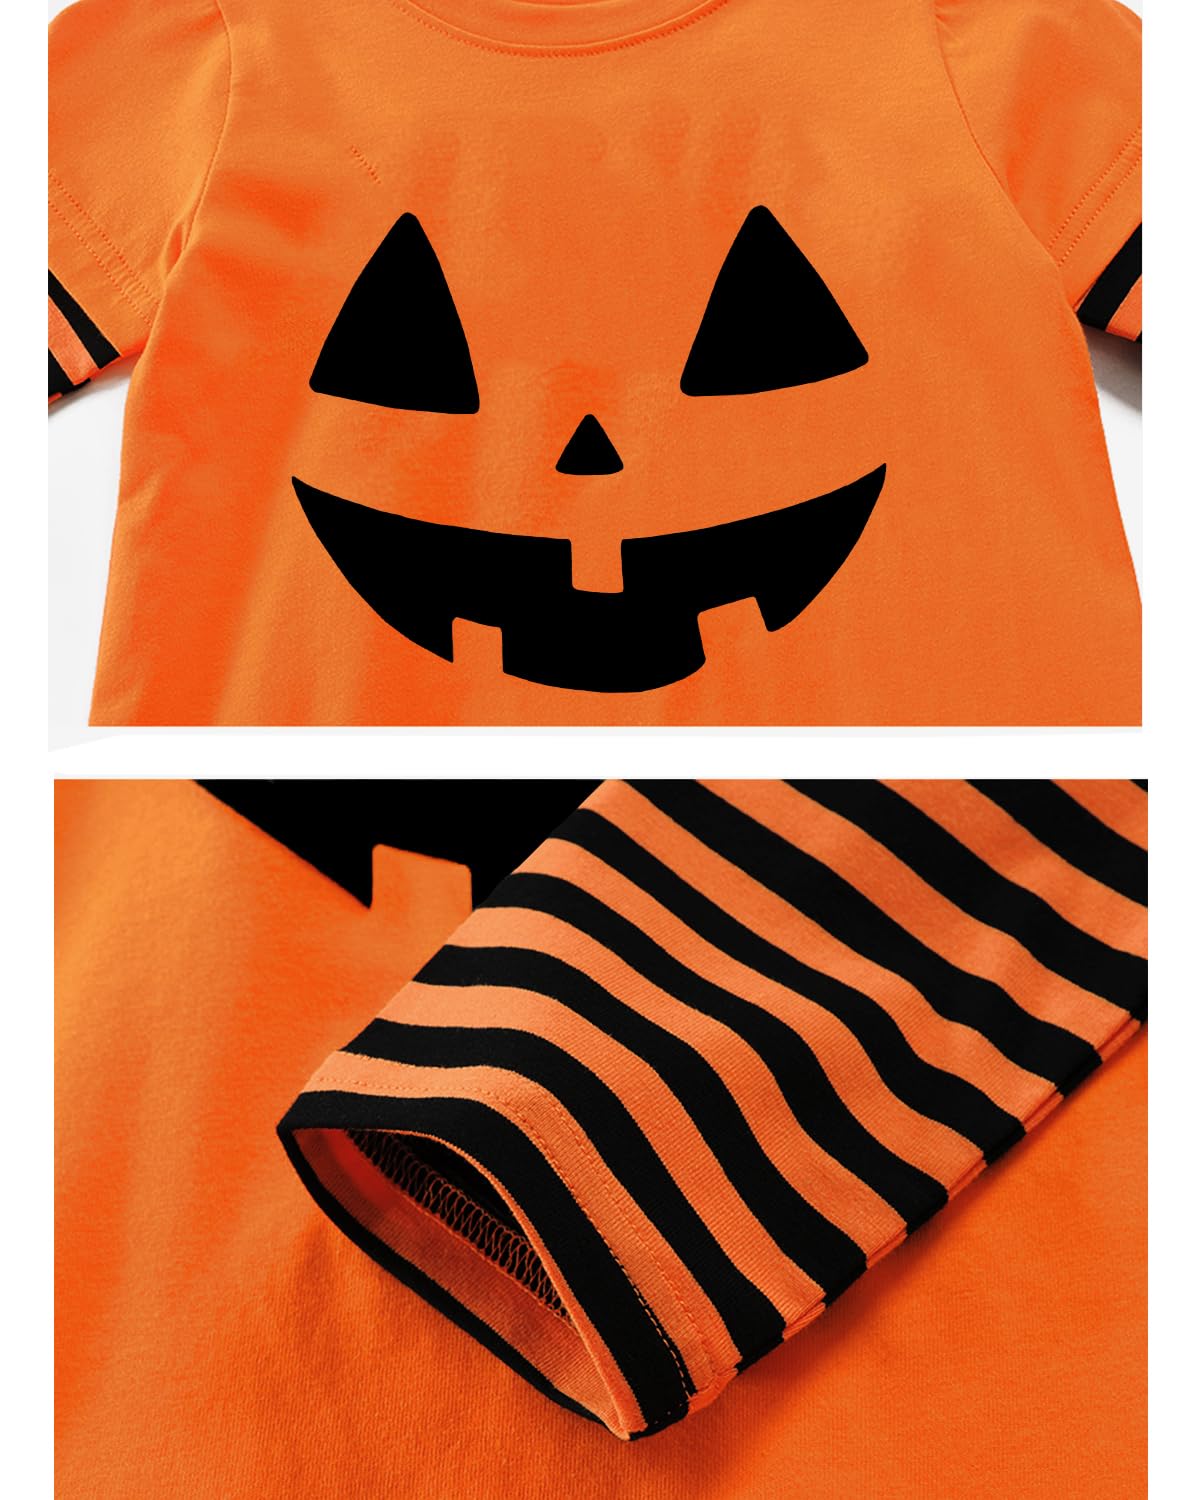 DHASIUE Halloween Shirt for Toddler Boy Girl Pumpkin Skeleton Ghost Dino Trucks Stripe Long Sleeve Tops for Kids 2-7 Years